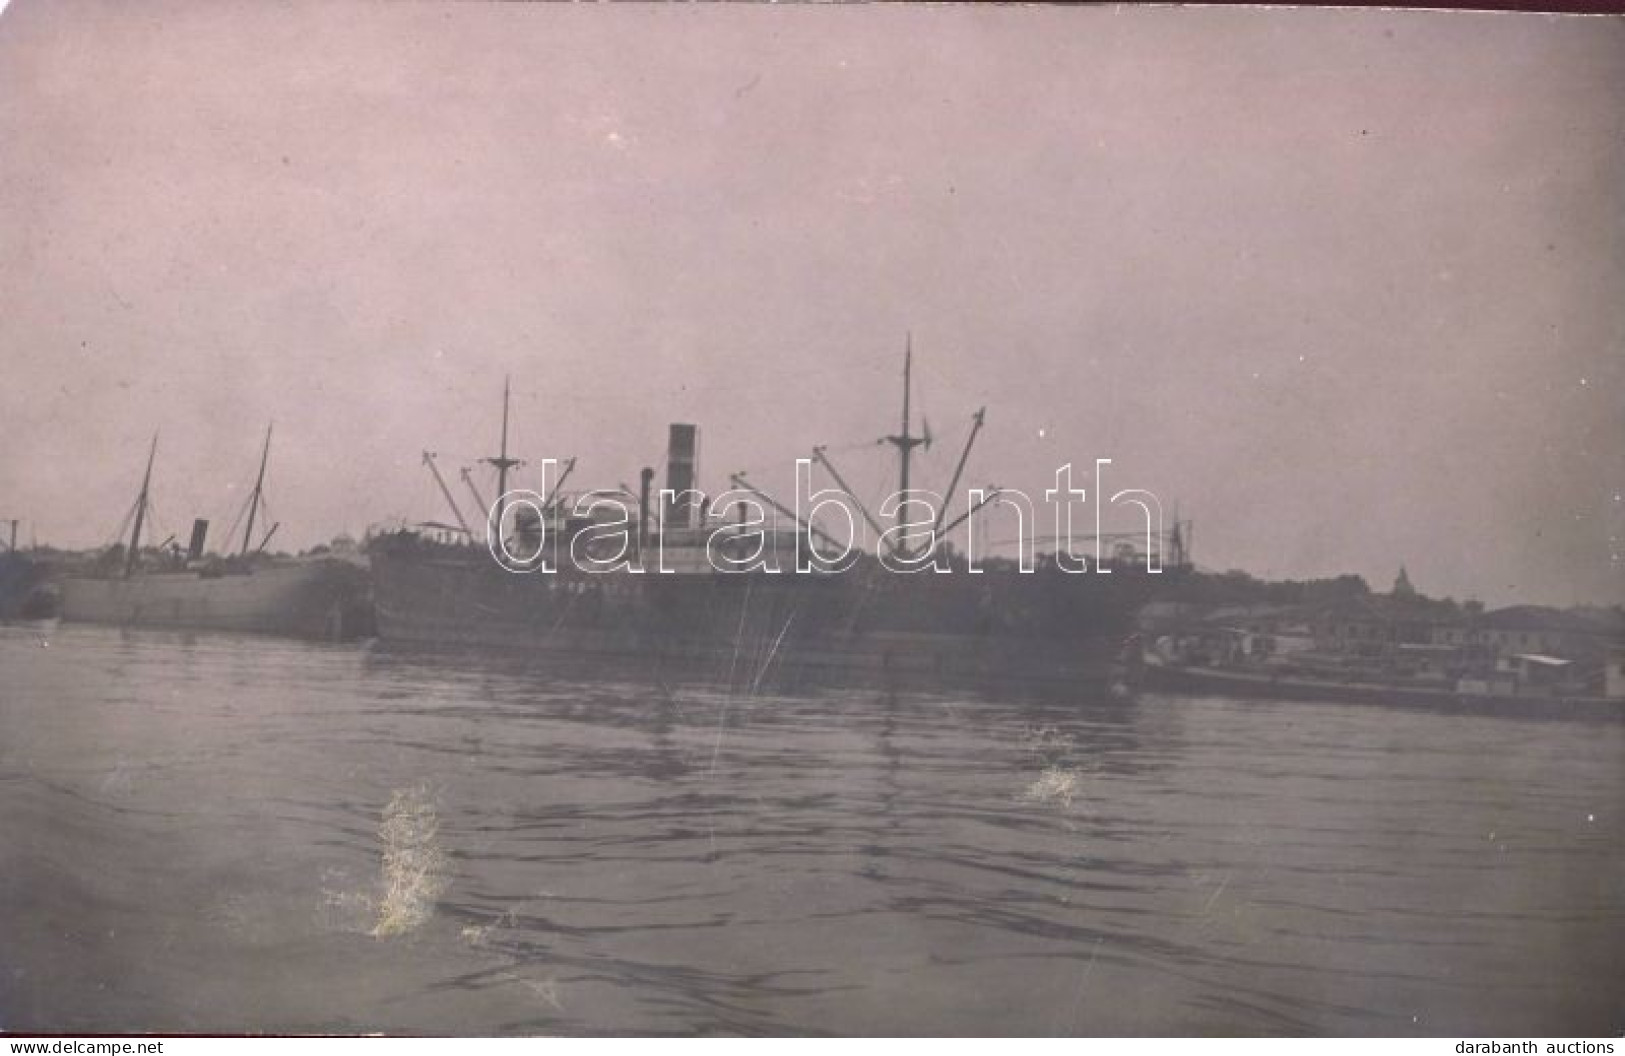 ** T2/T3 Galati, Galac, Galatz; Post With Cargo Ship. G. Maksay Fotograf Photo (fl) - Unclassified